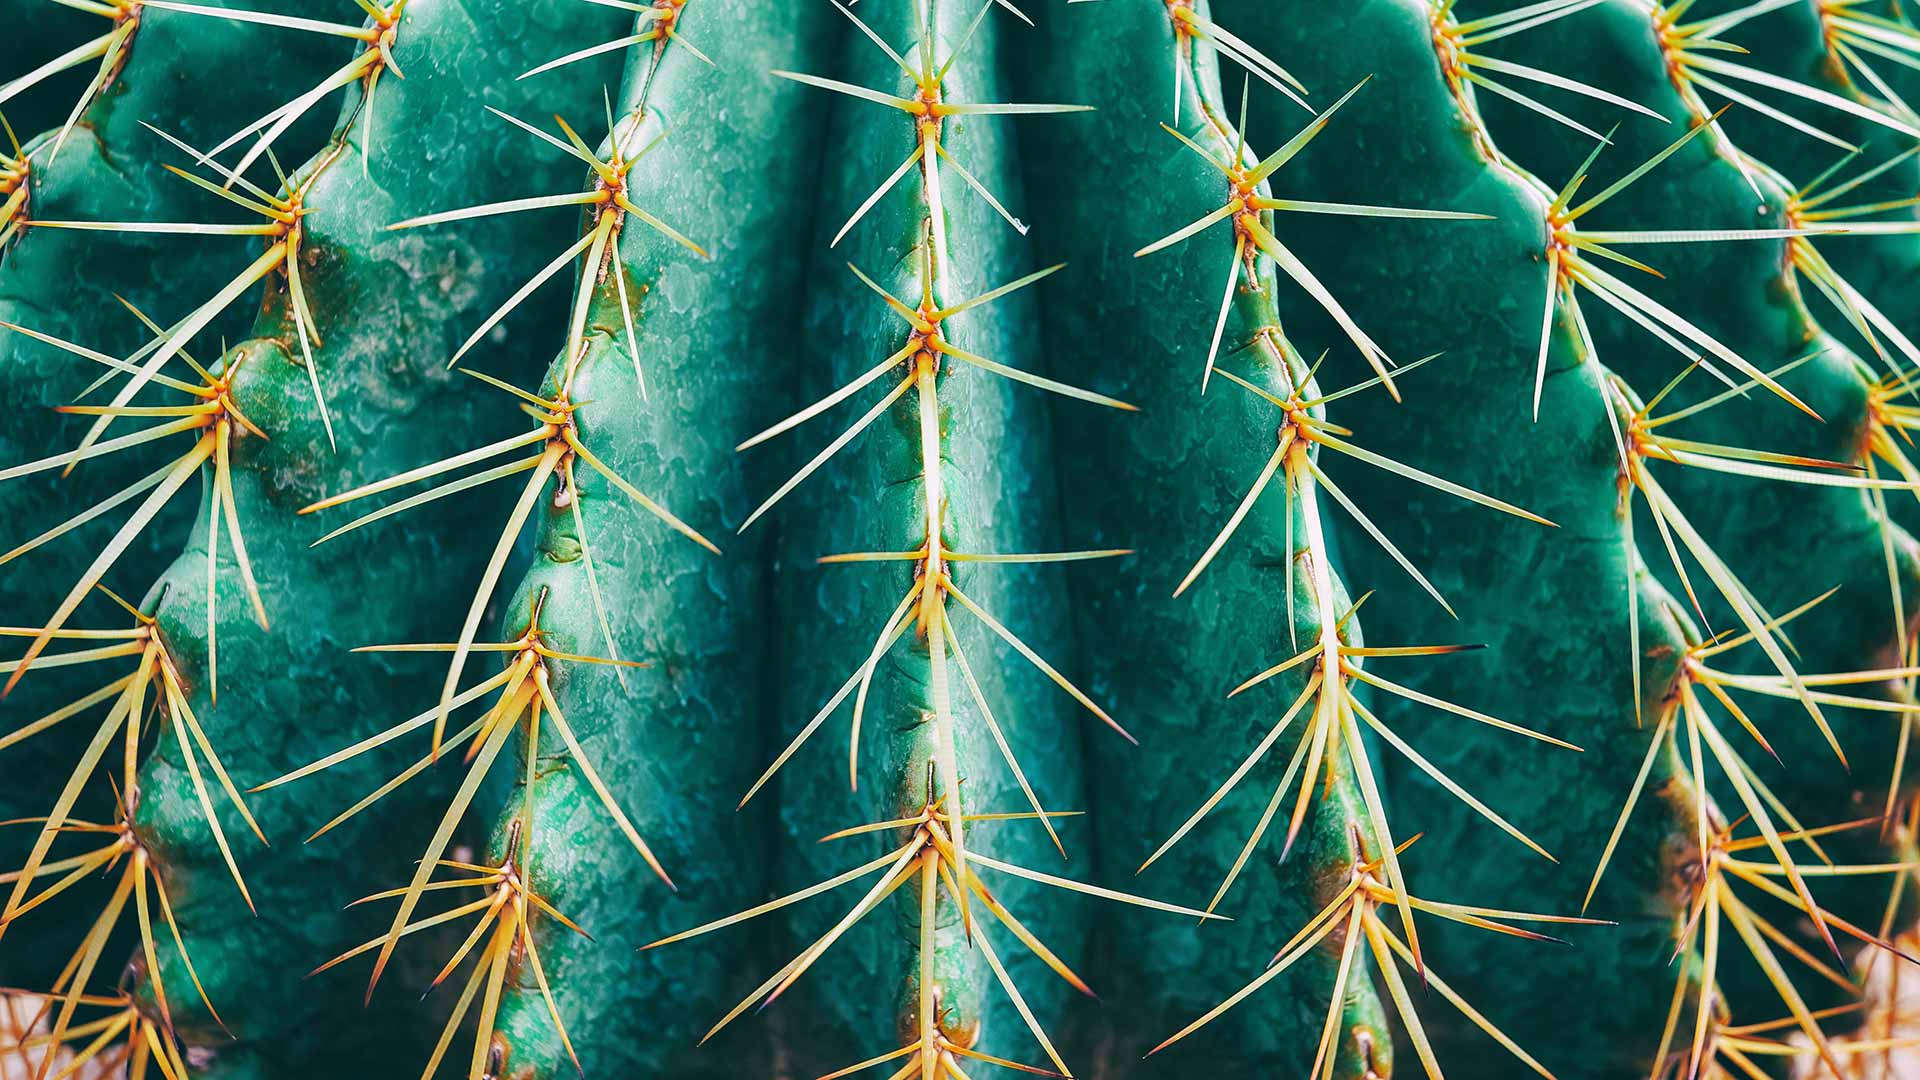 Sharp thorns on cactus